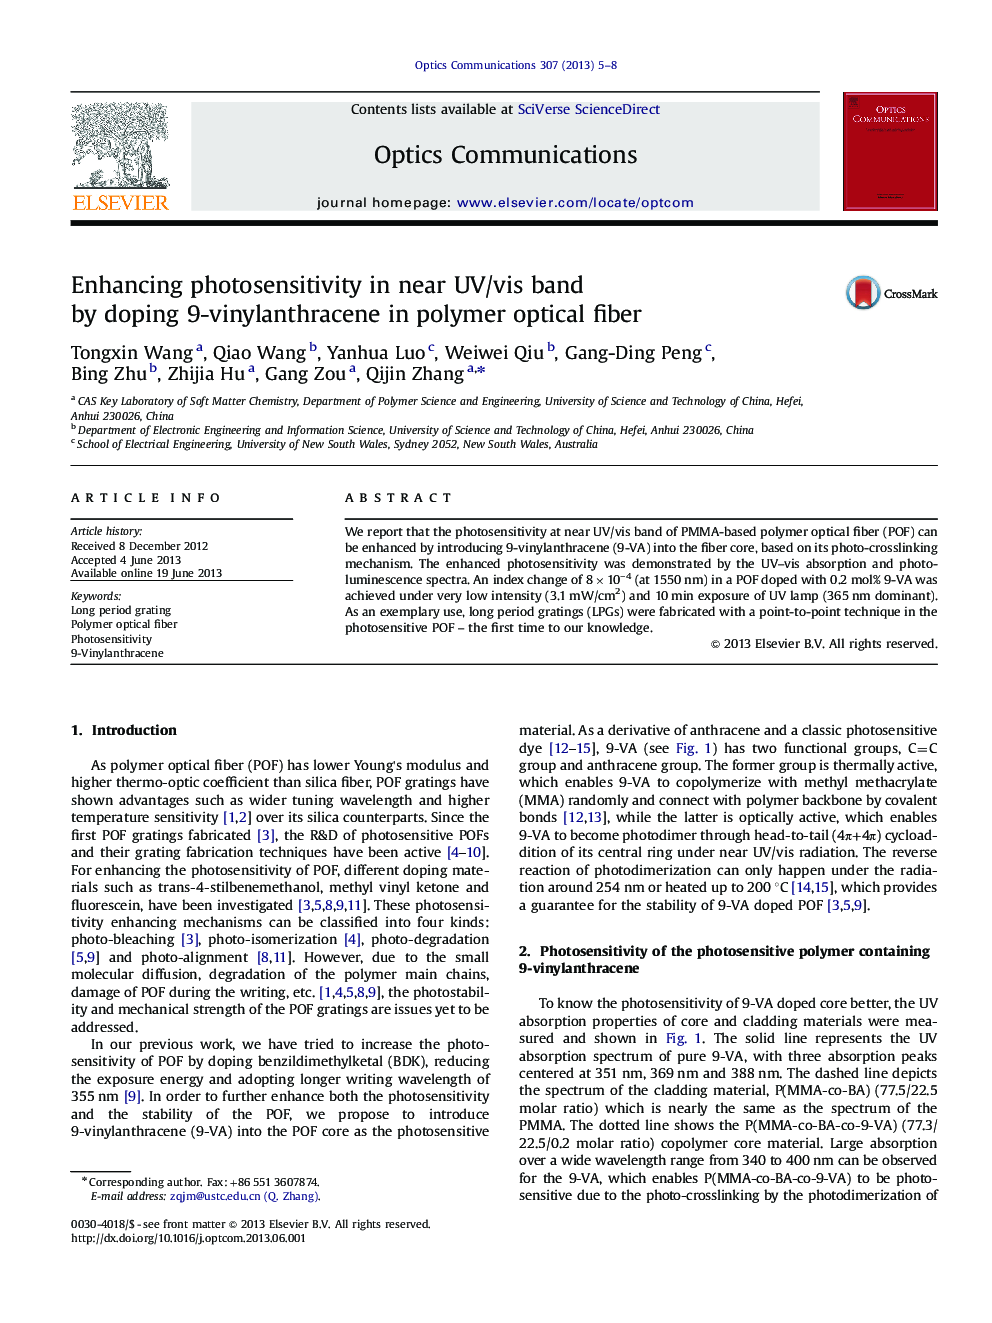 Enhancing photosensitivity in near UV/vis band by doping 9-vinylanthracene in polymer optical fiber